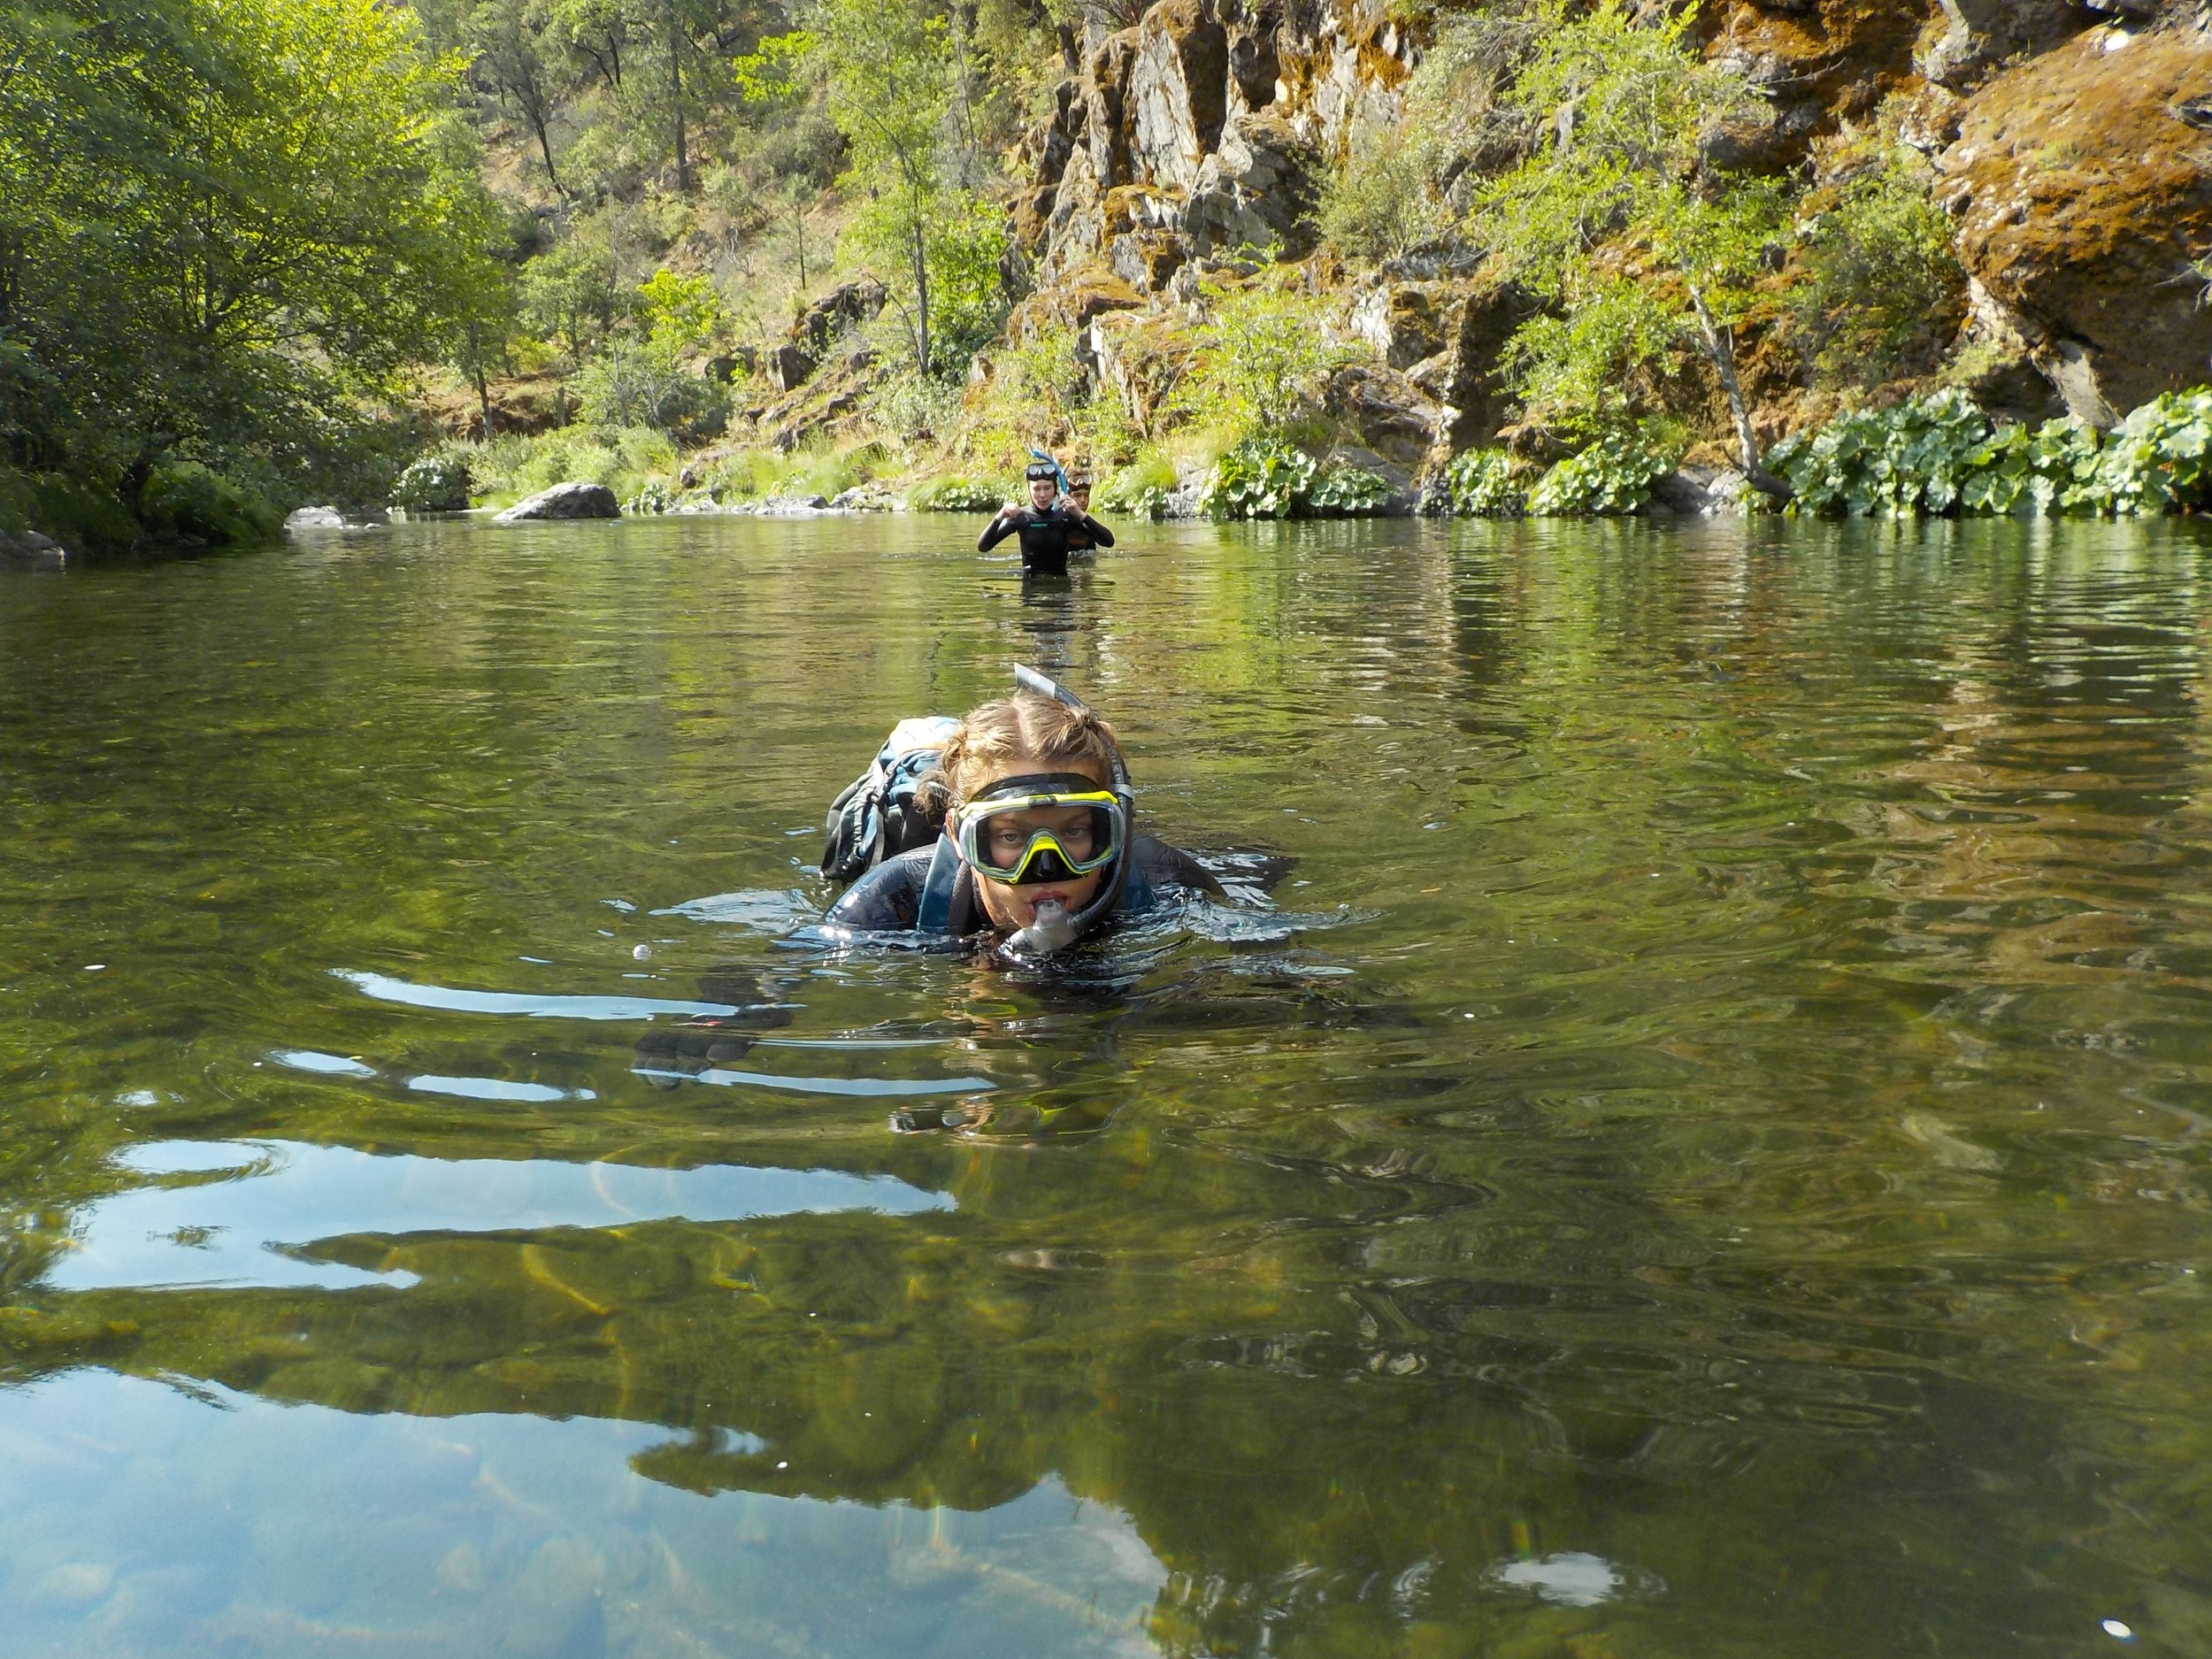  Interns learned underwater fish identification through snorkel surveys on the Klamath River tributaries. 